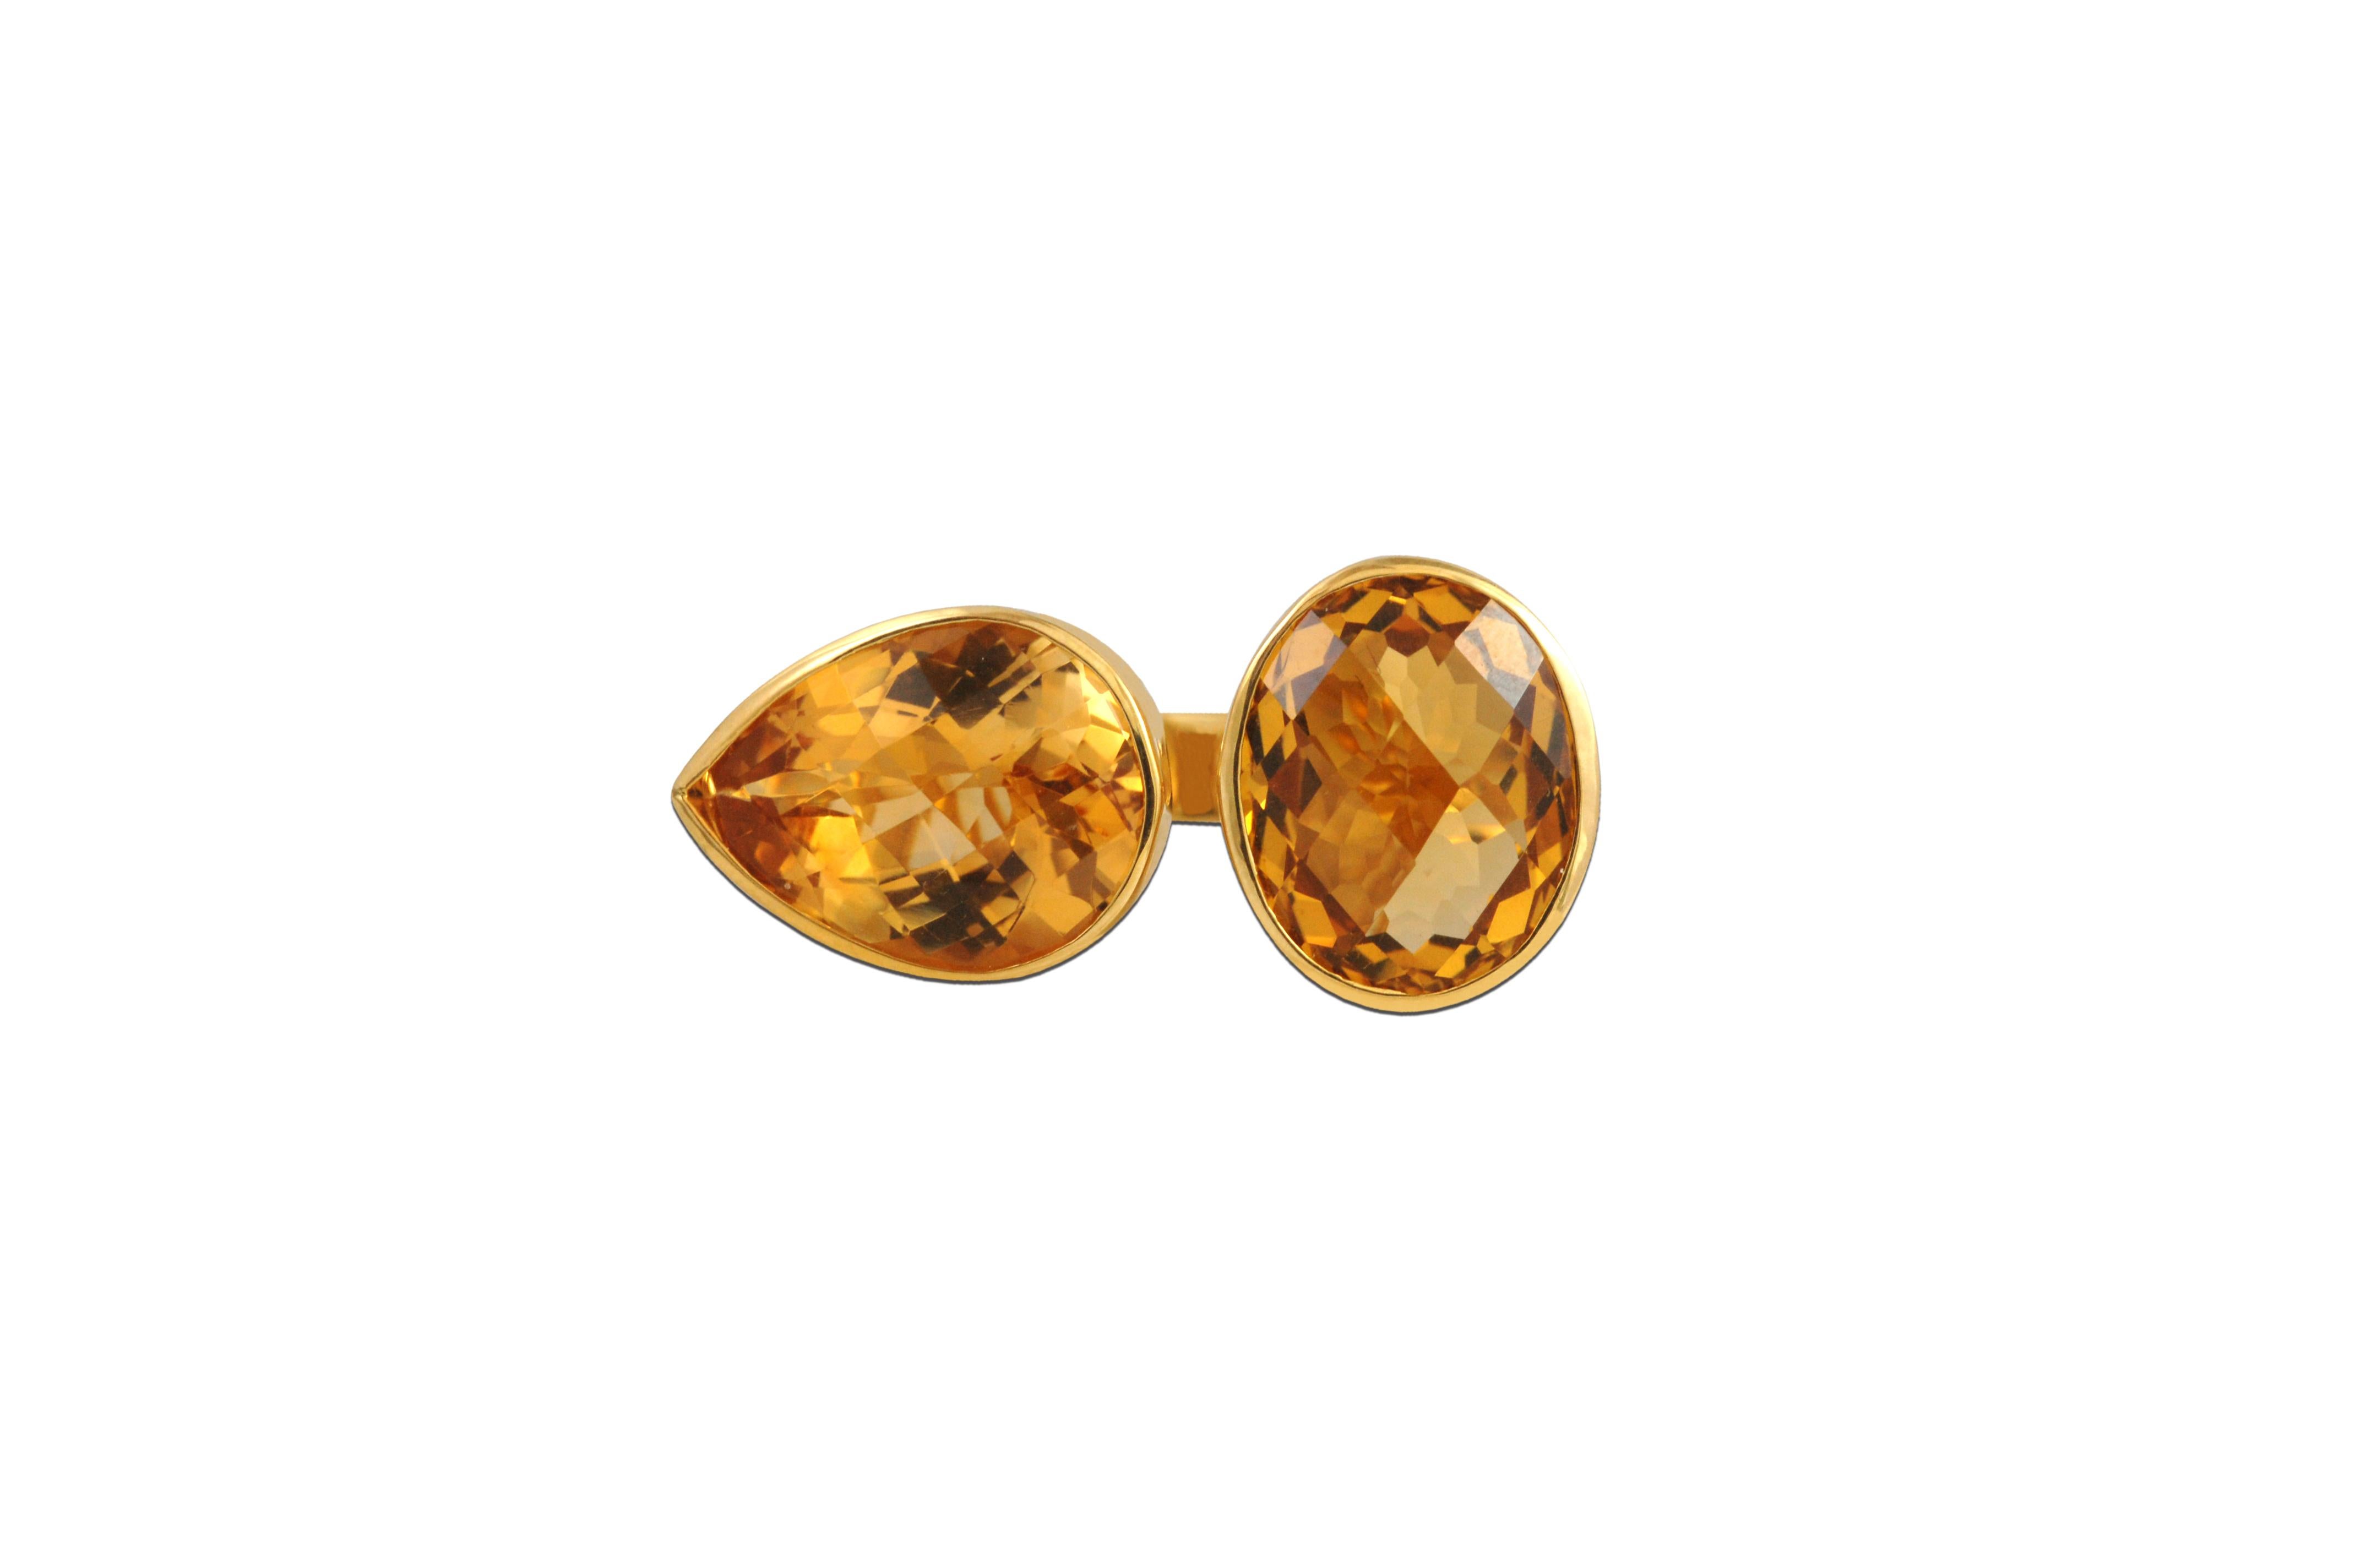 Citrine 8.80 carats, Citrine 9.62 carats ring set in 14 Karat Gold Settings 

Width: 3.6 cm
Length: 1.7 cm 
Ring Size: 55

